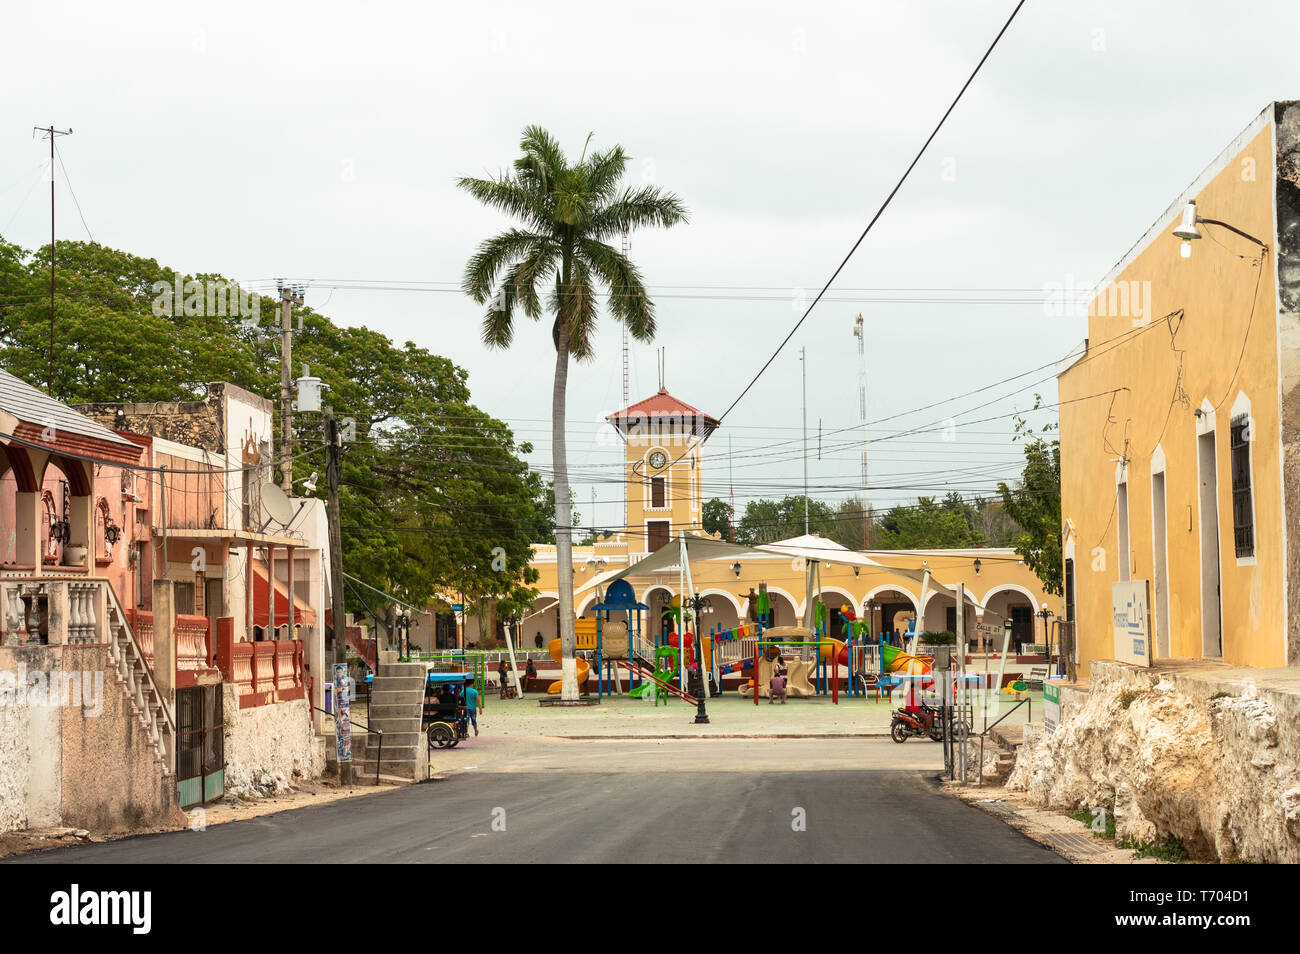 View of the main square in Maxcanu, Yucatan. Stock Photo